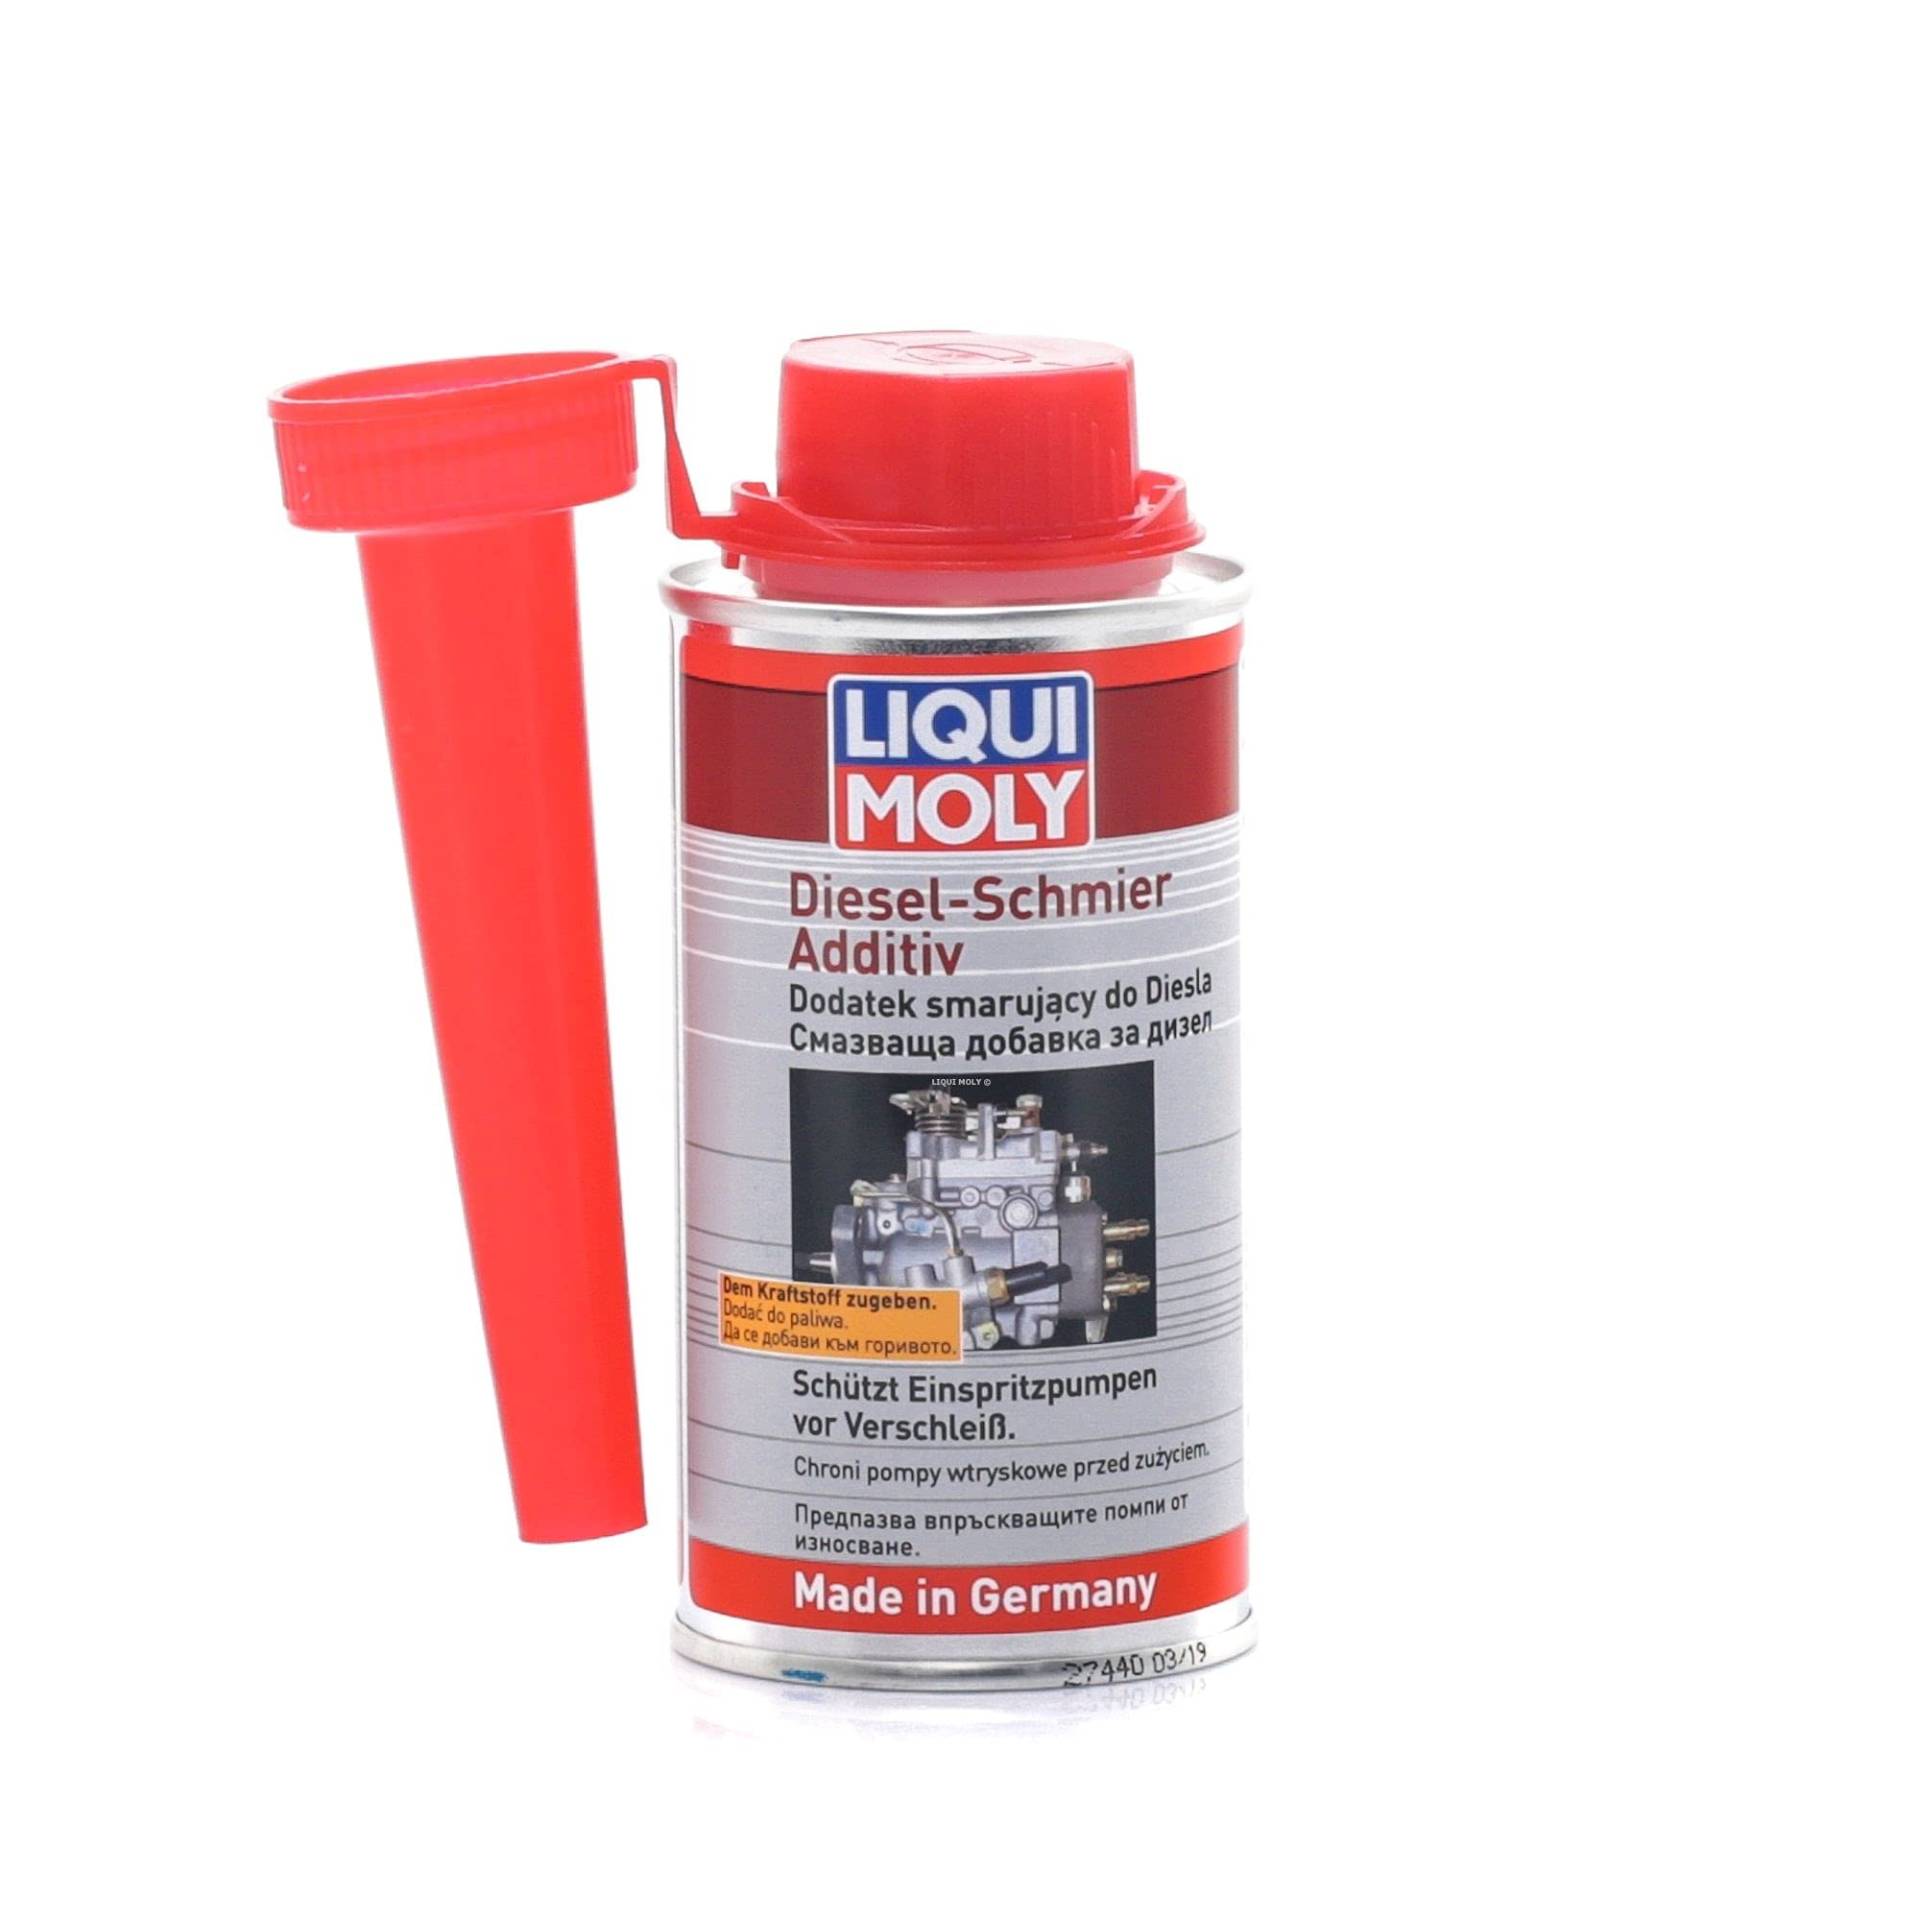 LIQUI MOLY Diesel-Schmieradditiv | 150 ml | Dieseladditiv | Art.-Nr.: 20454 von Liqui Moly